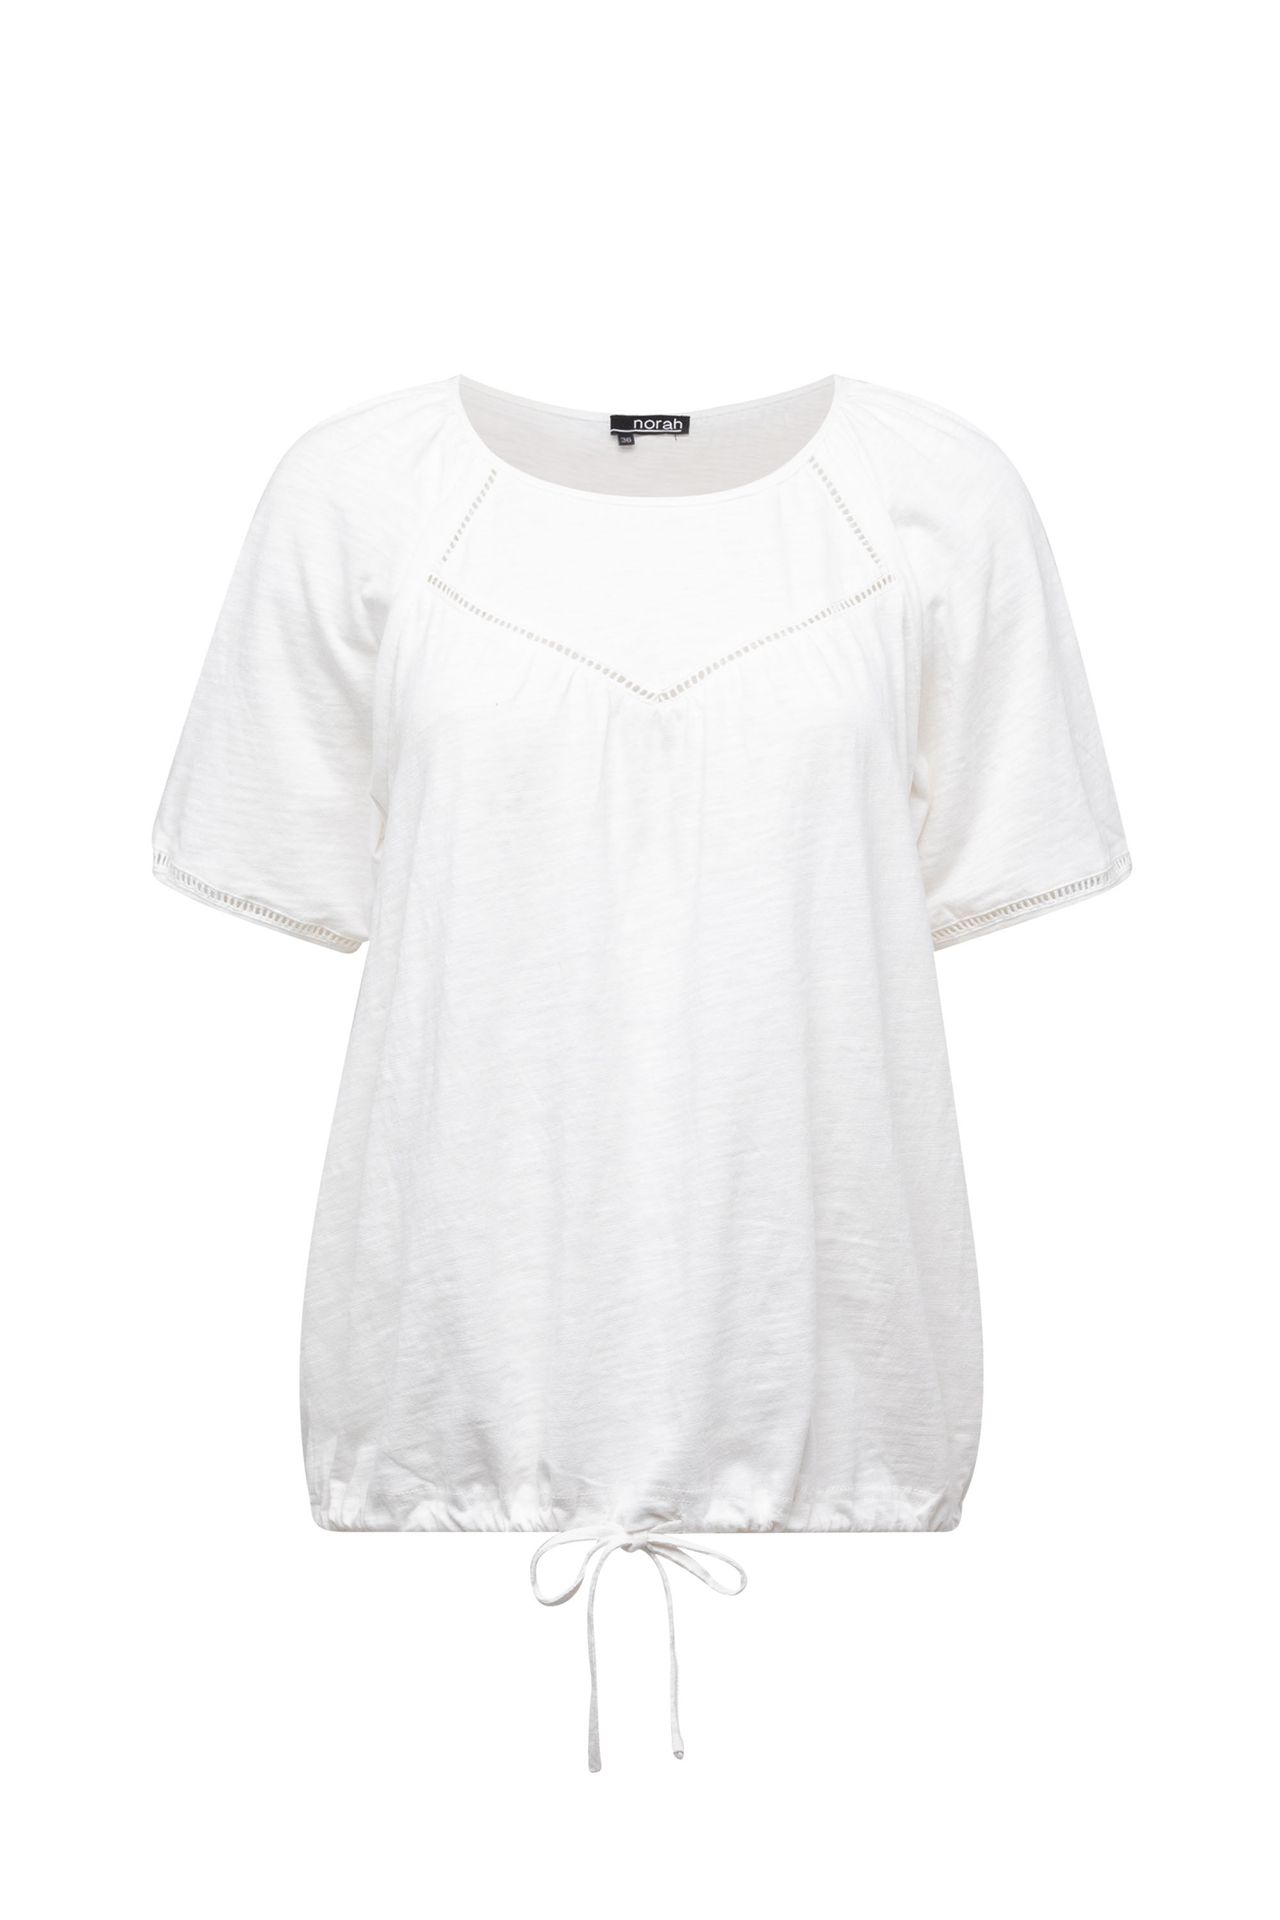 Norah Off white shirt off-white 213667-101